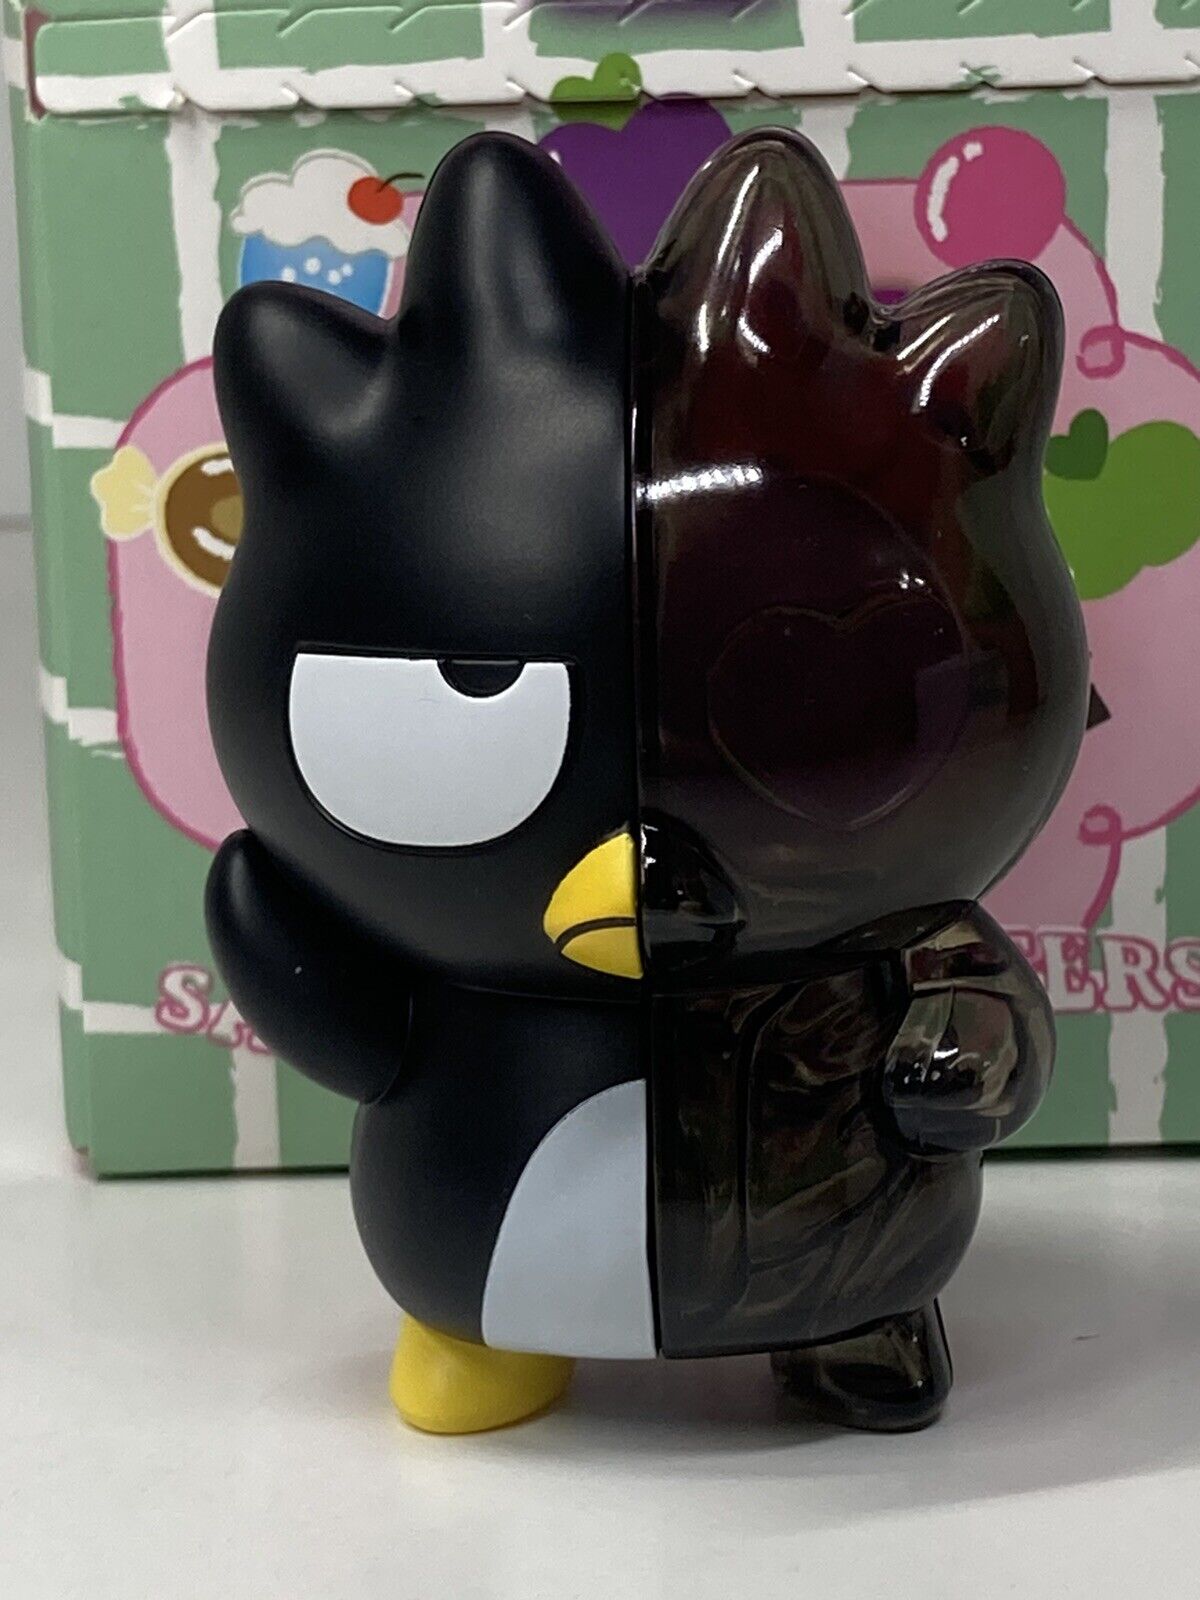 Bad badtz-maru Kandy Surprises Figure Sanrio Hello Kitty Mighty Jaxx New Opened